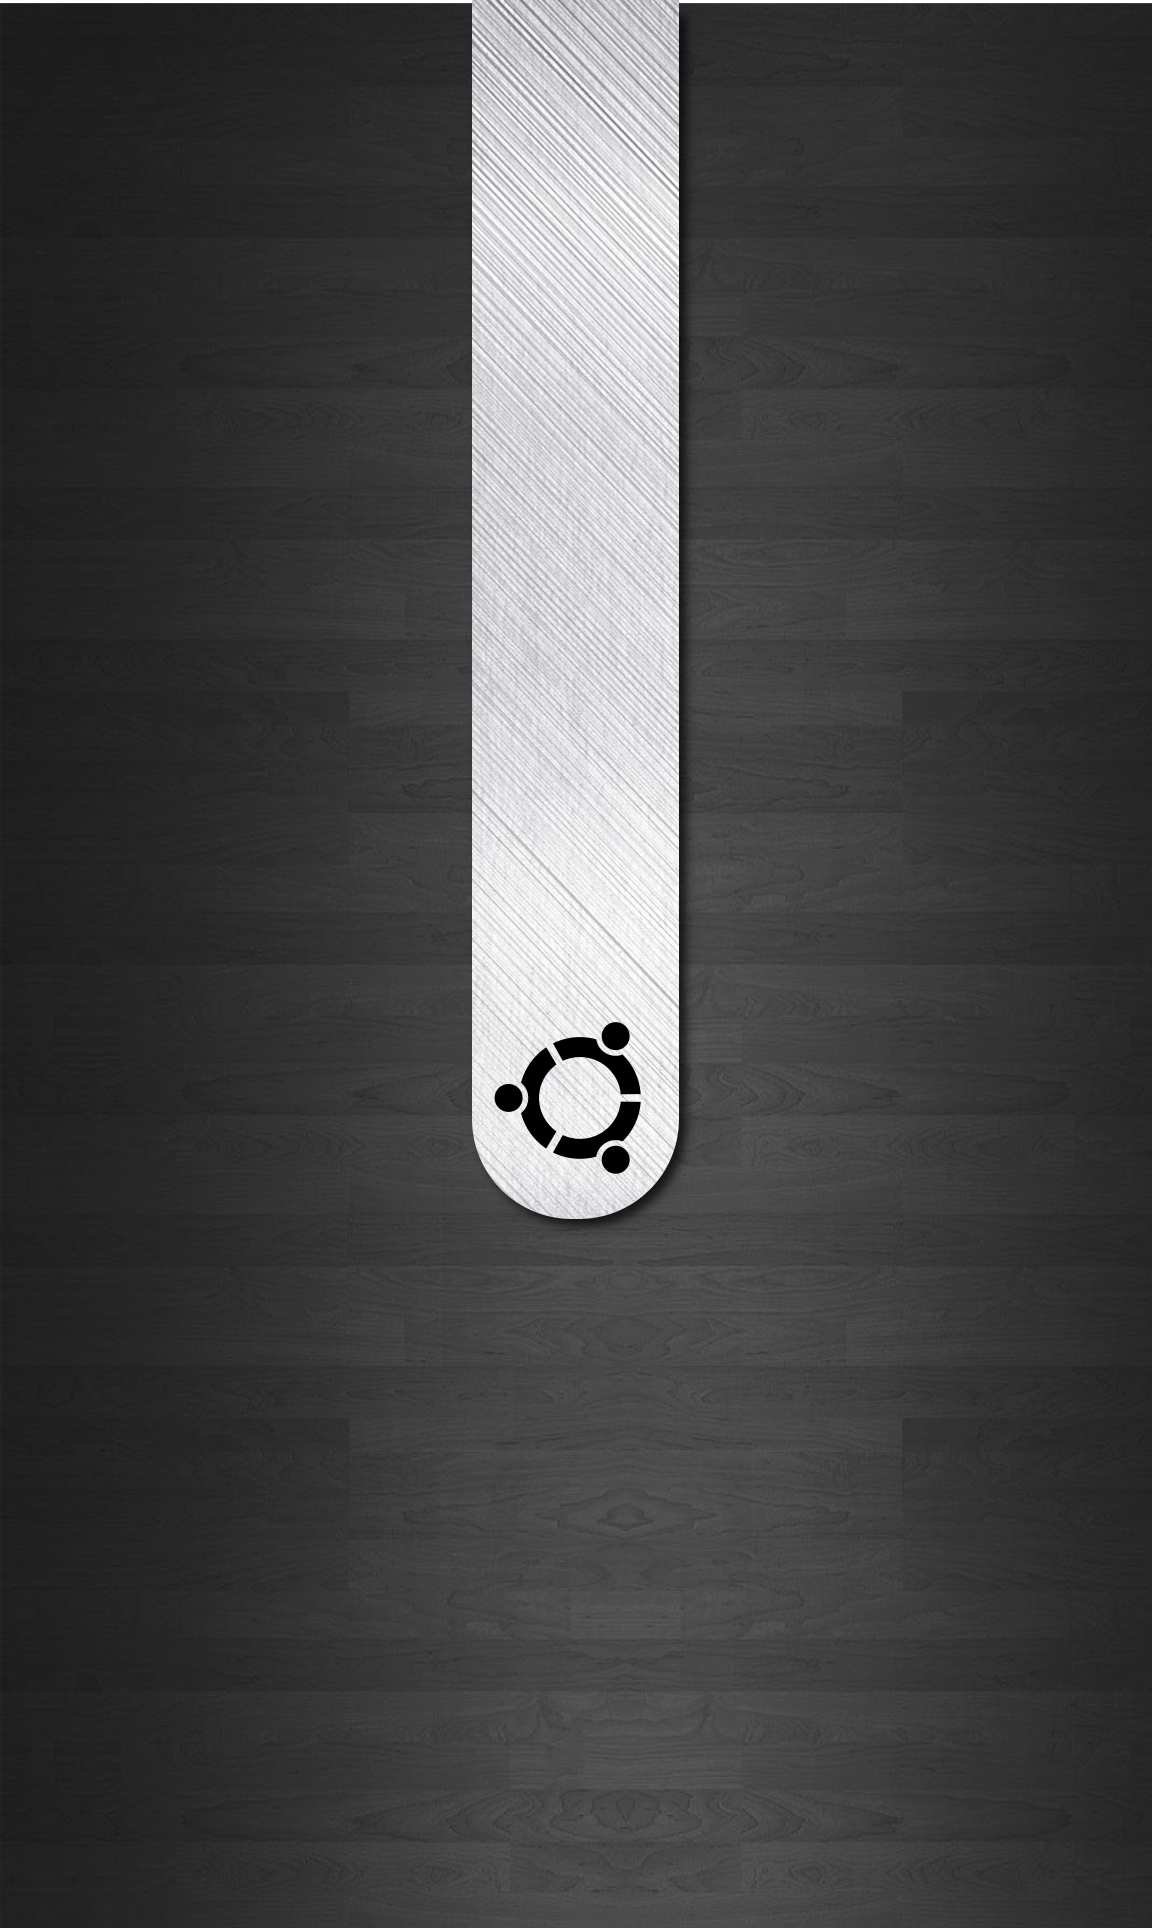 Ubuntu Phone Meizu MX4 Wallpaper by costales